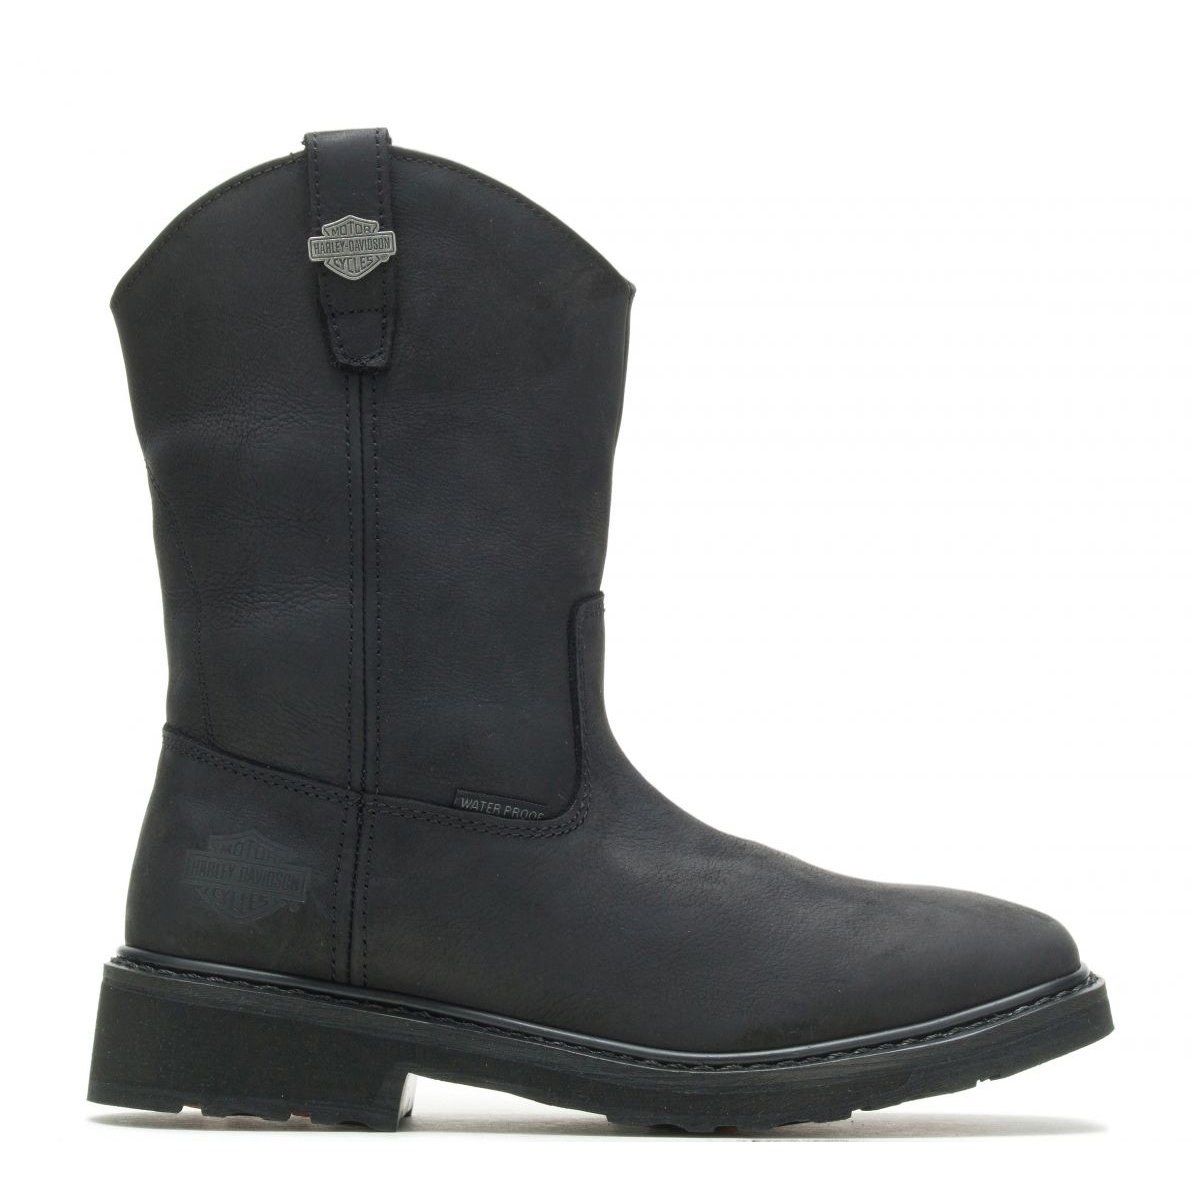 HARLEY-DAVIDSON WORK Men's Altman Western Classic Soft Toe Work Boot Black - D93561 Black/black - Black/black, 12